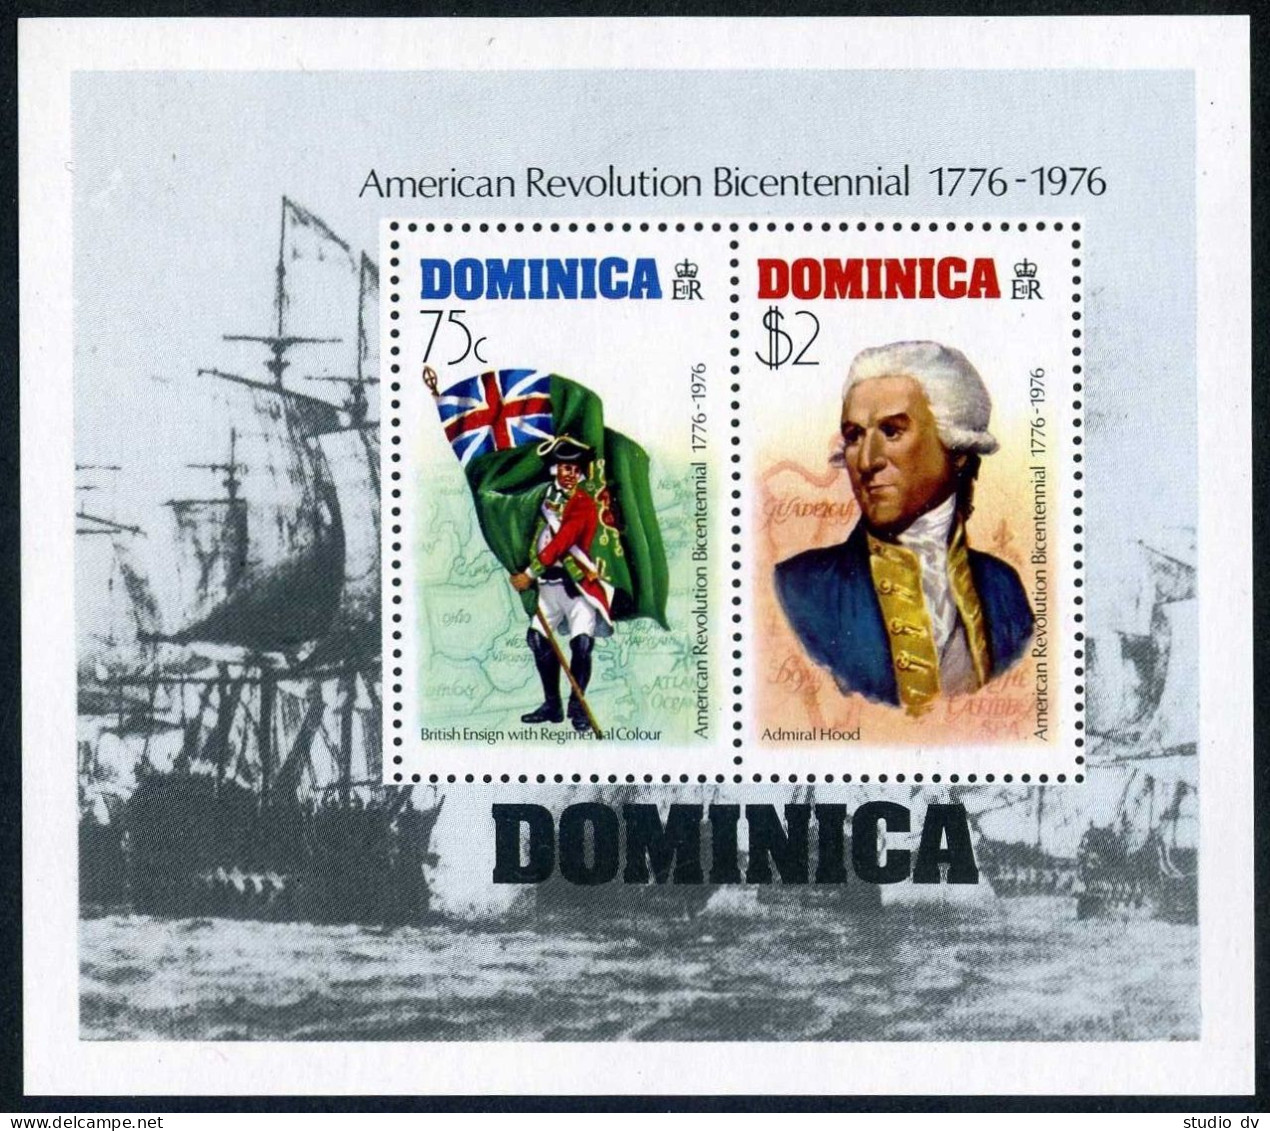 Dominica 472-477,477a, MNH. USA-200,1976. Solders,Flags,Ship, George Washington. - Dominica (1978-...)